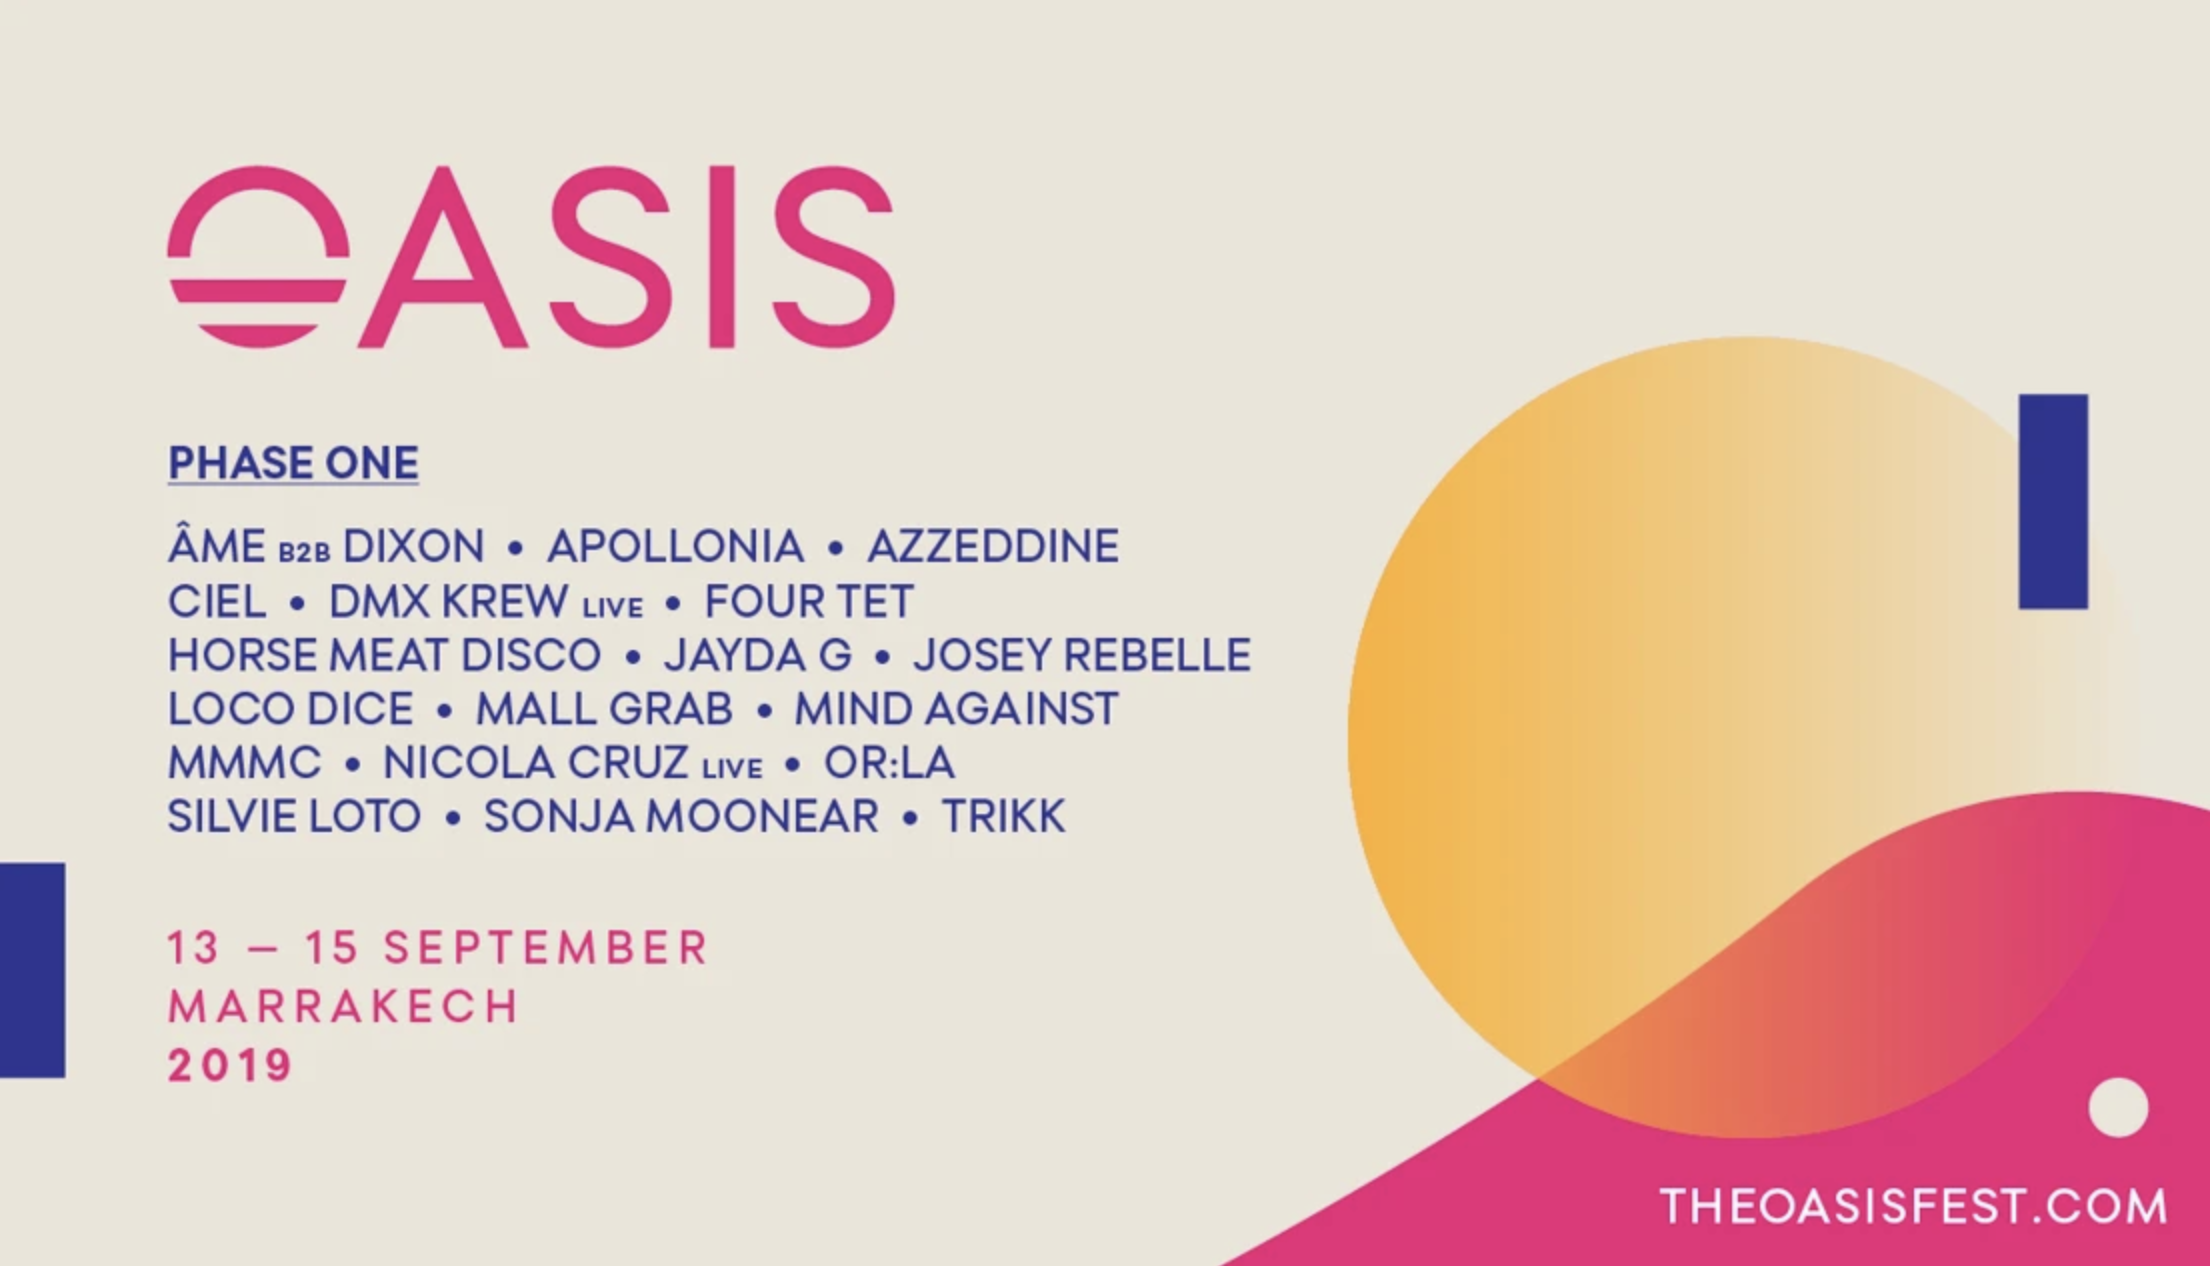 Oasis Festival Announced Their 2019 Lineup Today Feat. Four Tet, Âme b2b Dixon, Apollonia, Nicola Cruz, and MORE